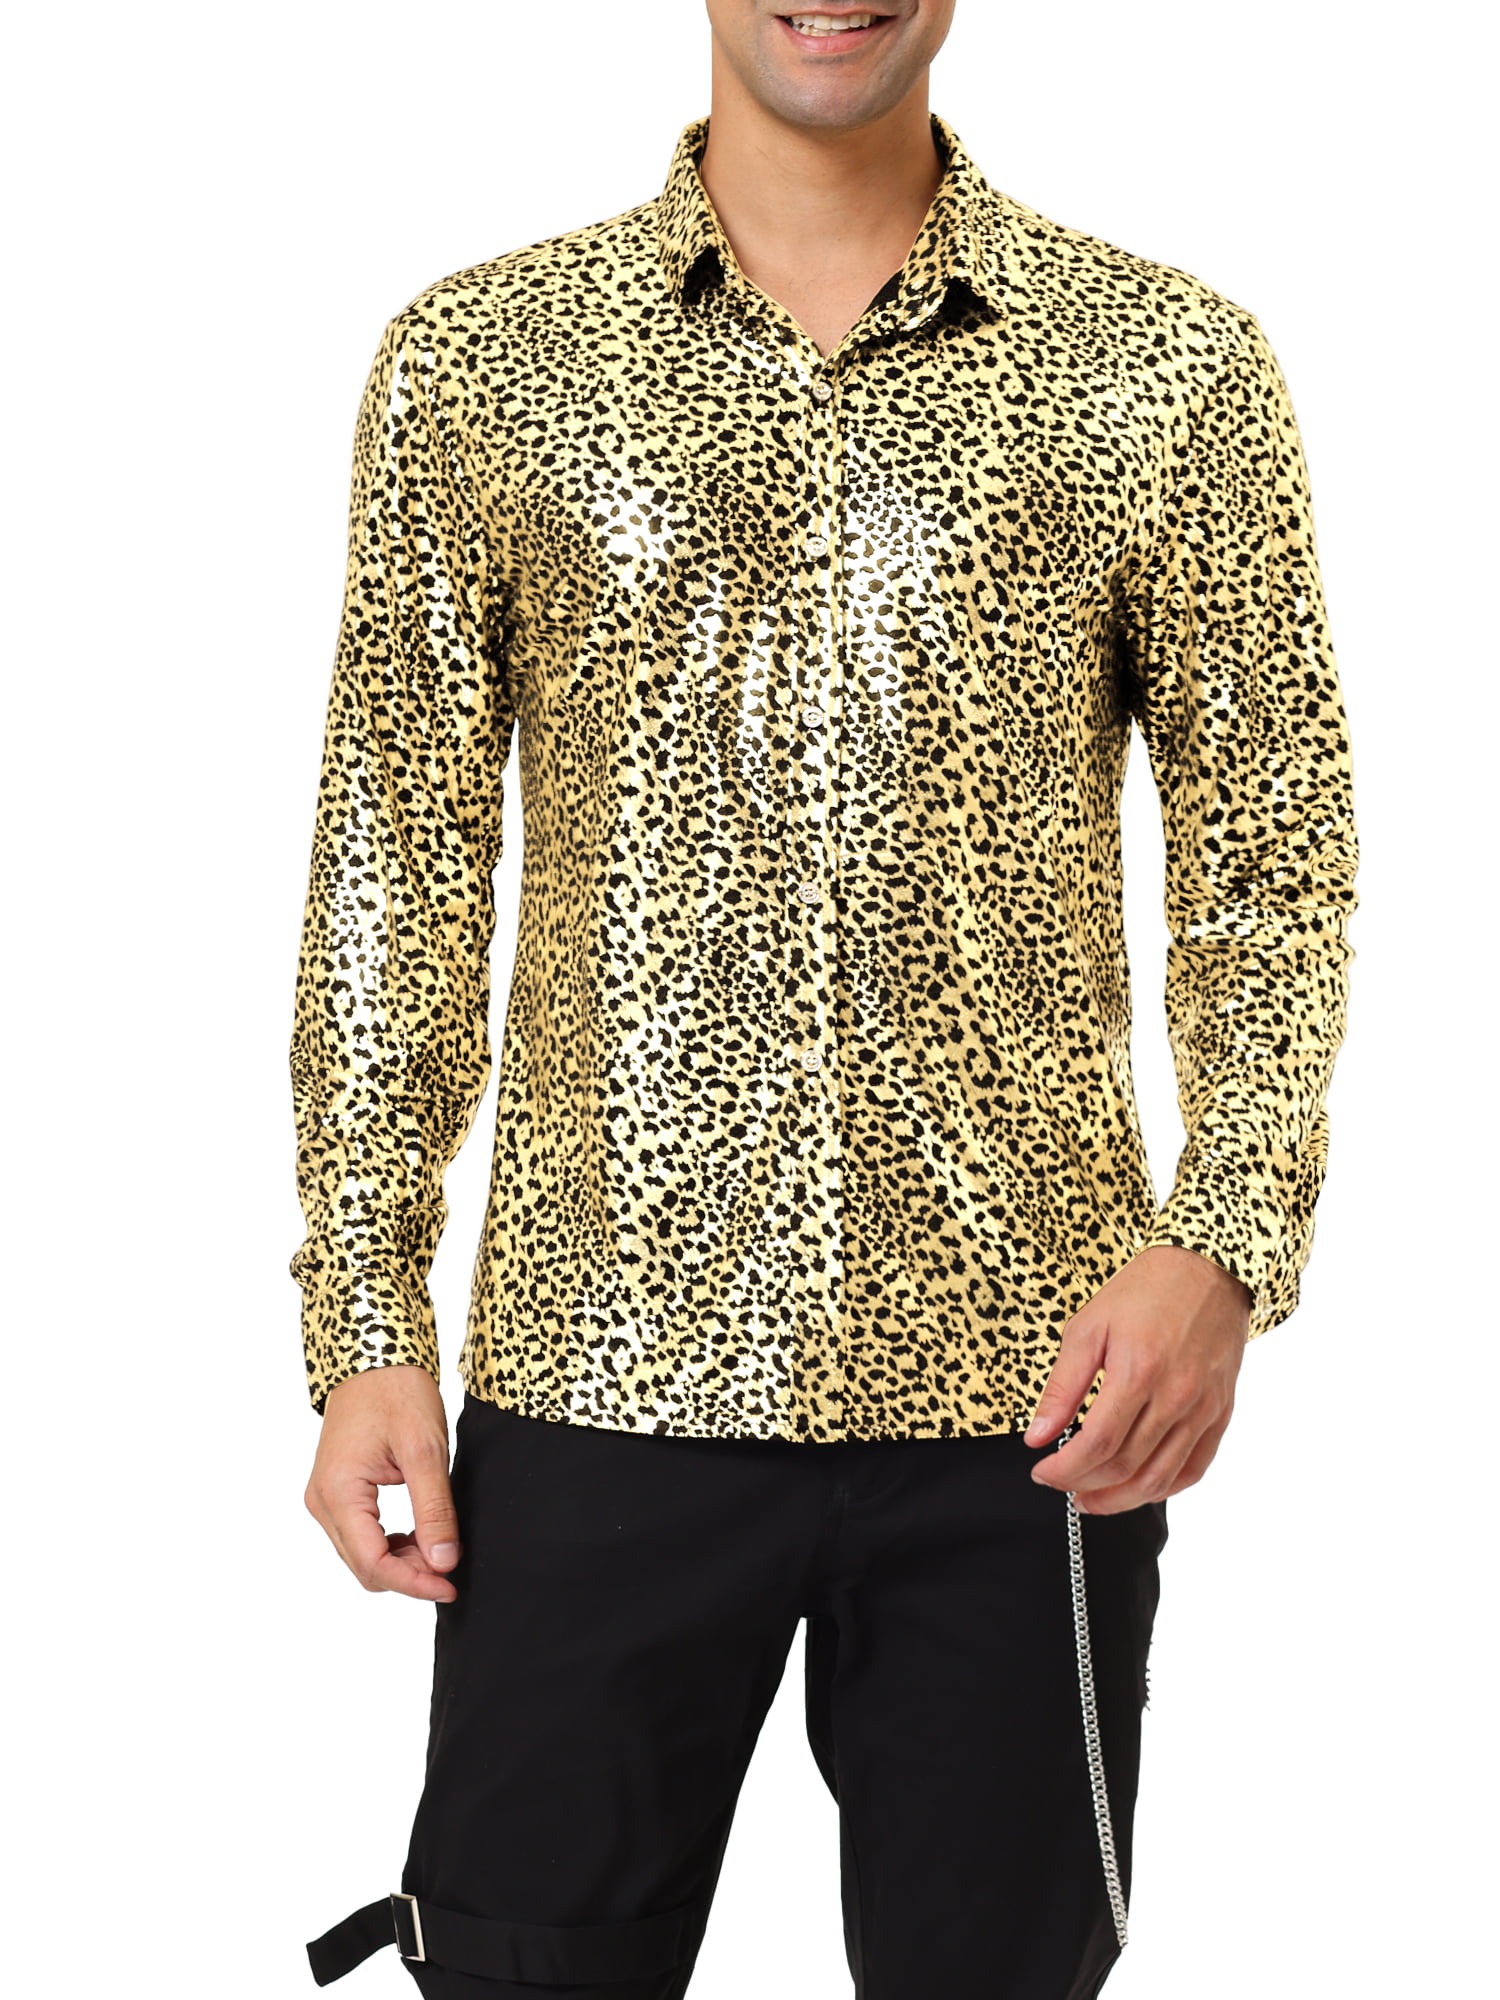 Gold Label Men's Long Sleeve Shirt FR Blue Plaid Size XLT Tall Man $18.99 